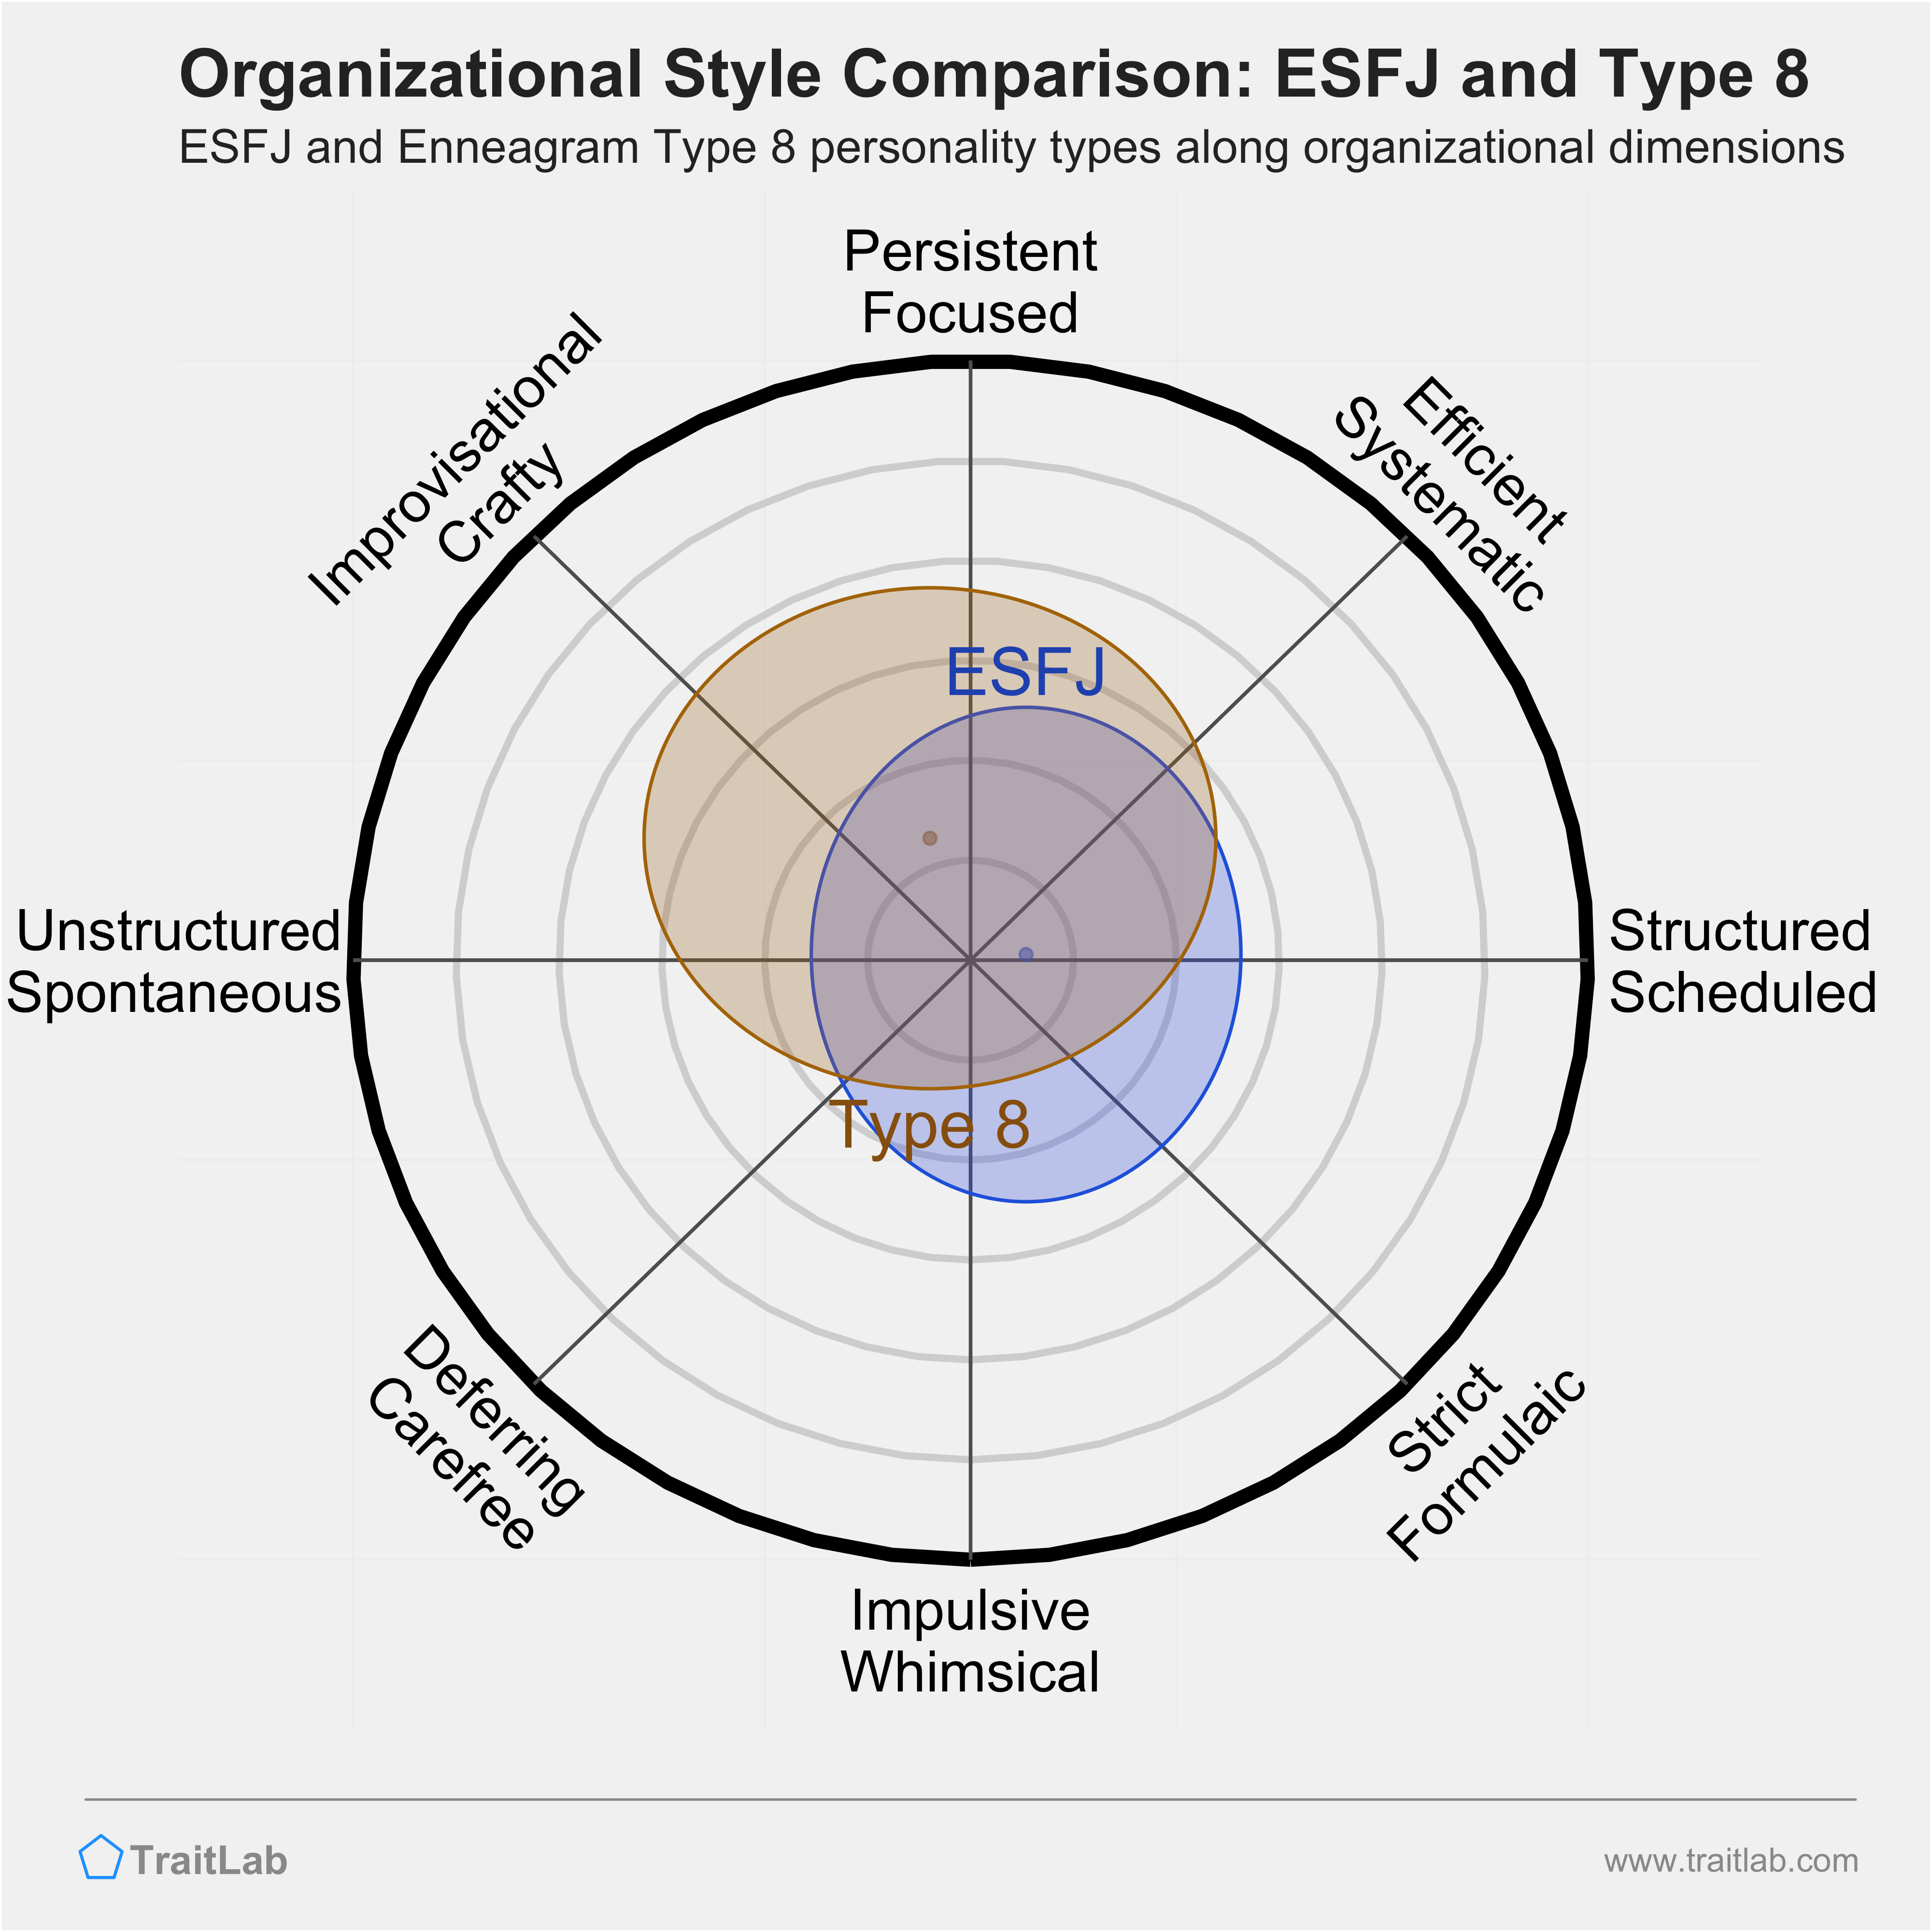 ESFJ and Type 8 comparison across organizational dimensions